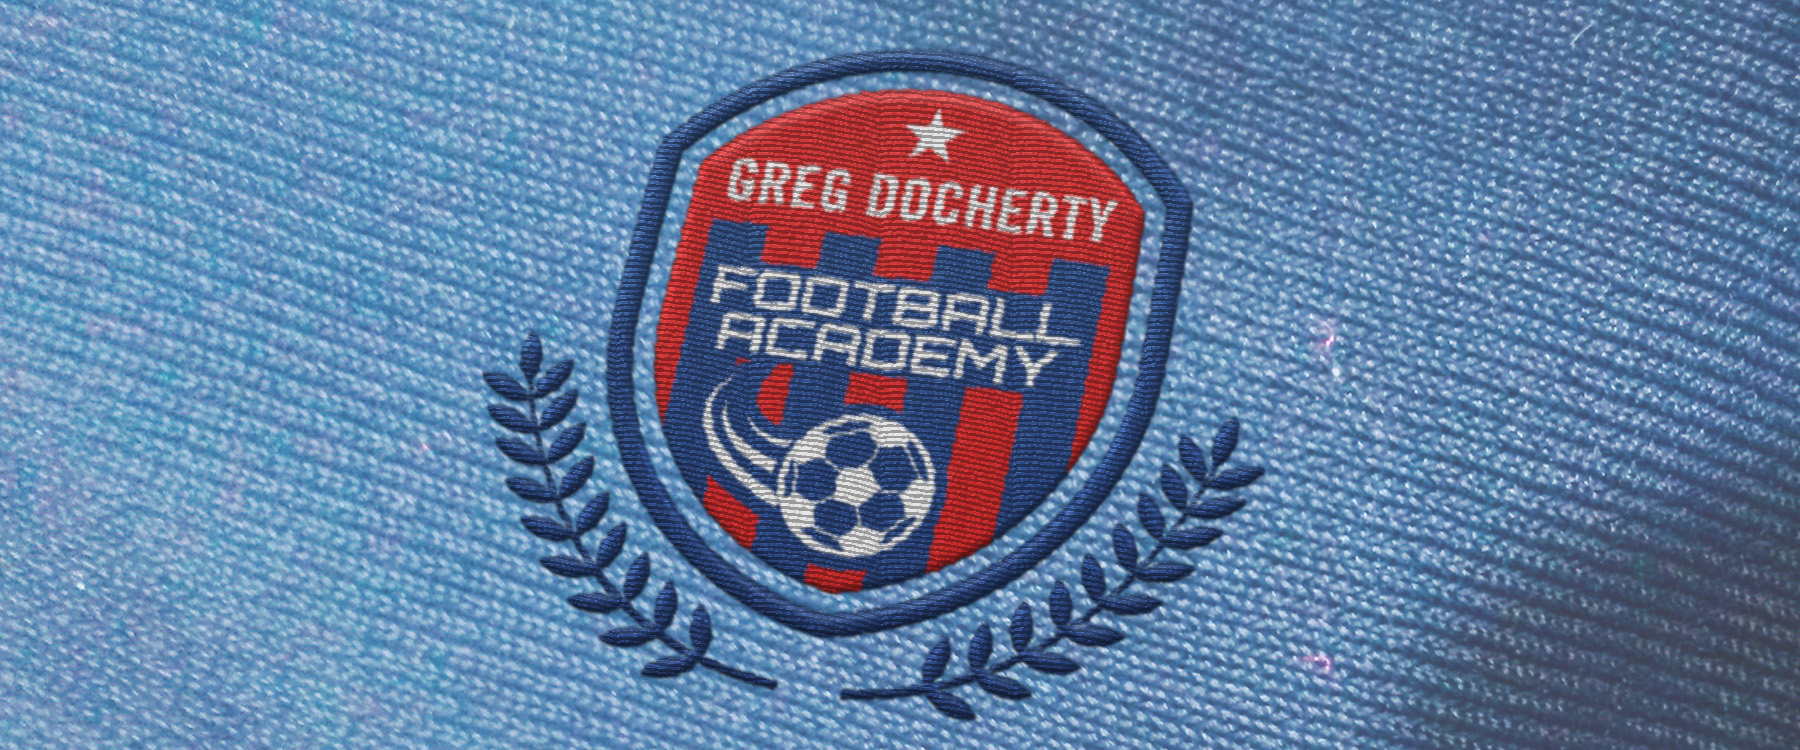 Greg Docherty football academy close up